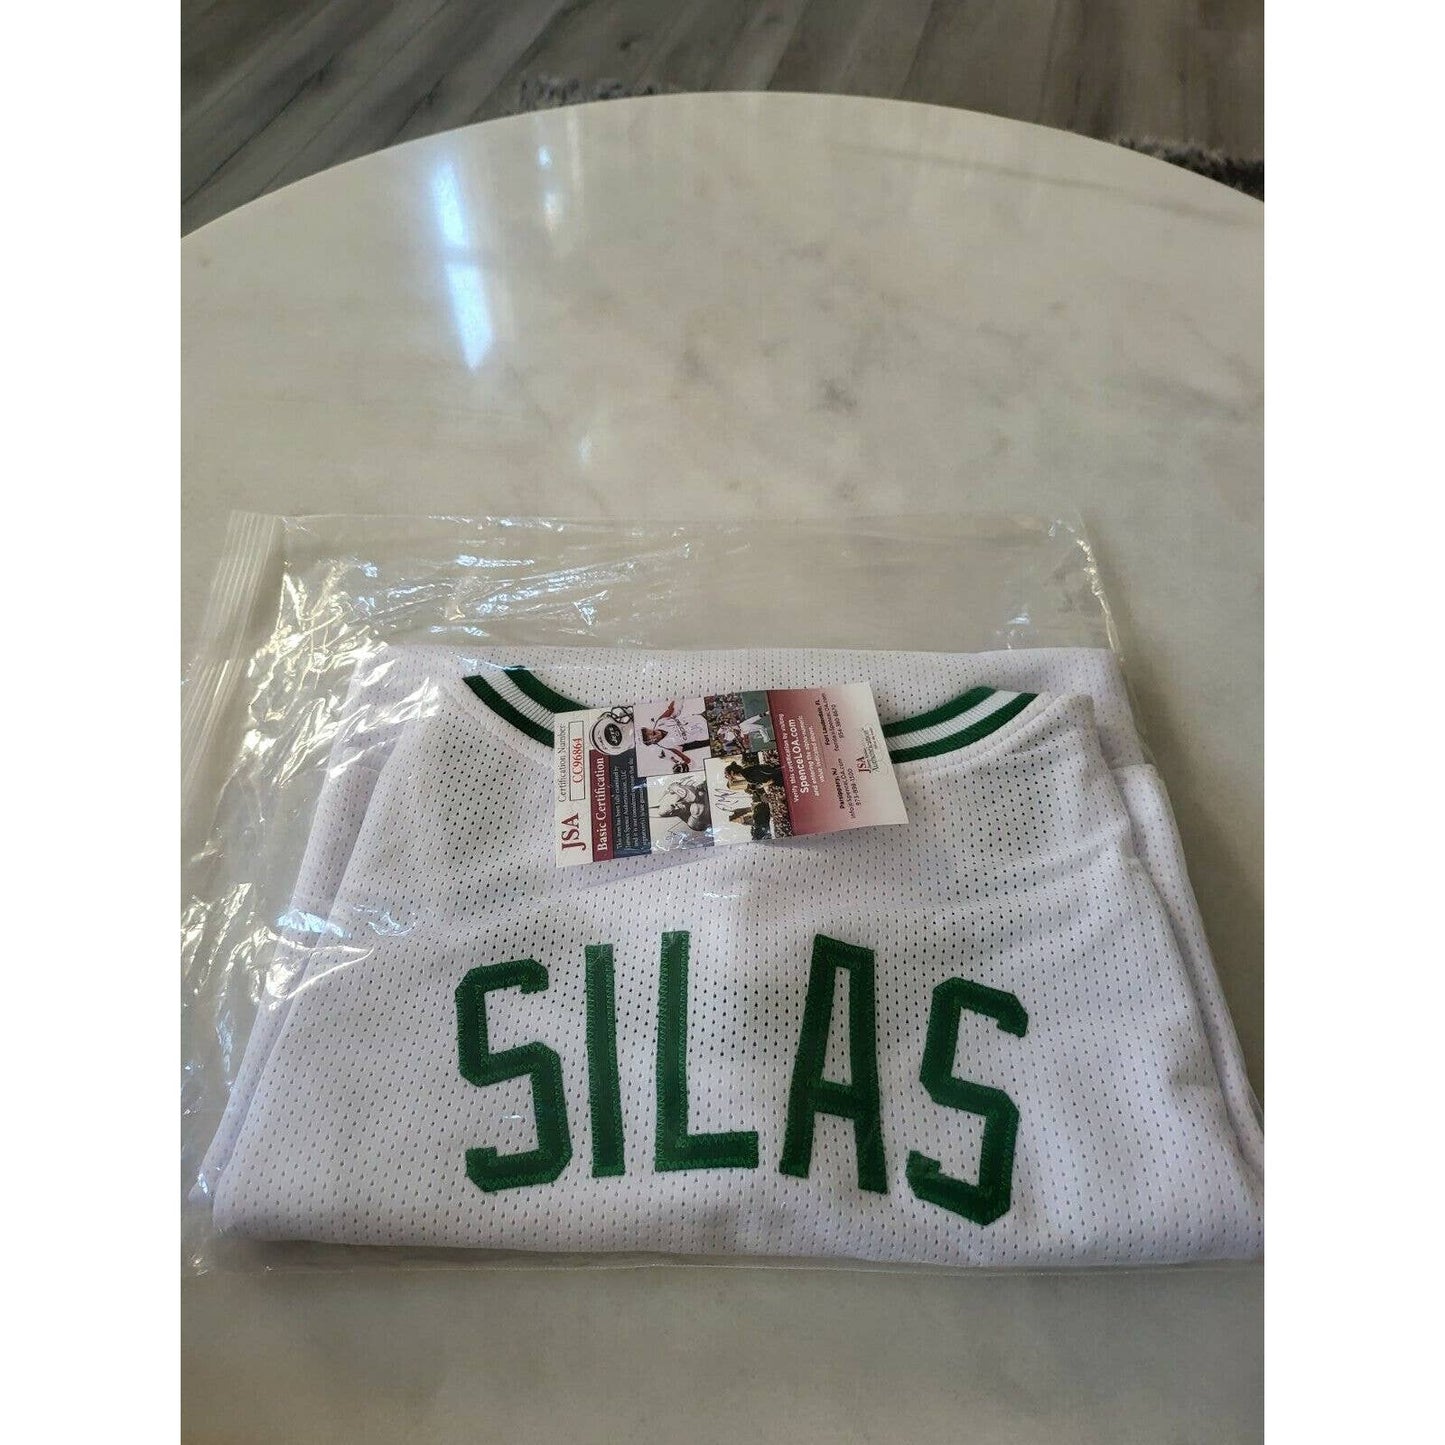 Paul Silas Autographed/Signed Jersey JSA COA Boston Celtics - TreasuresEvolved